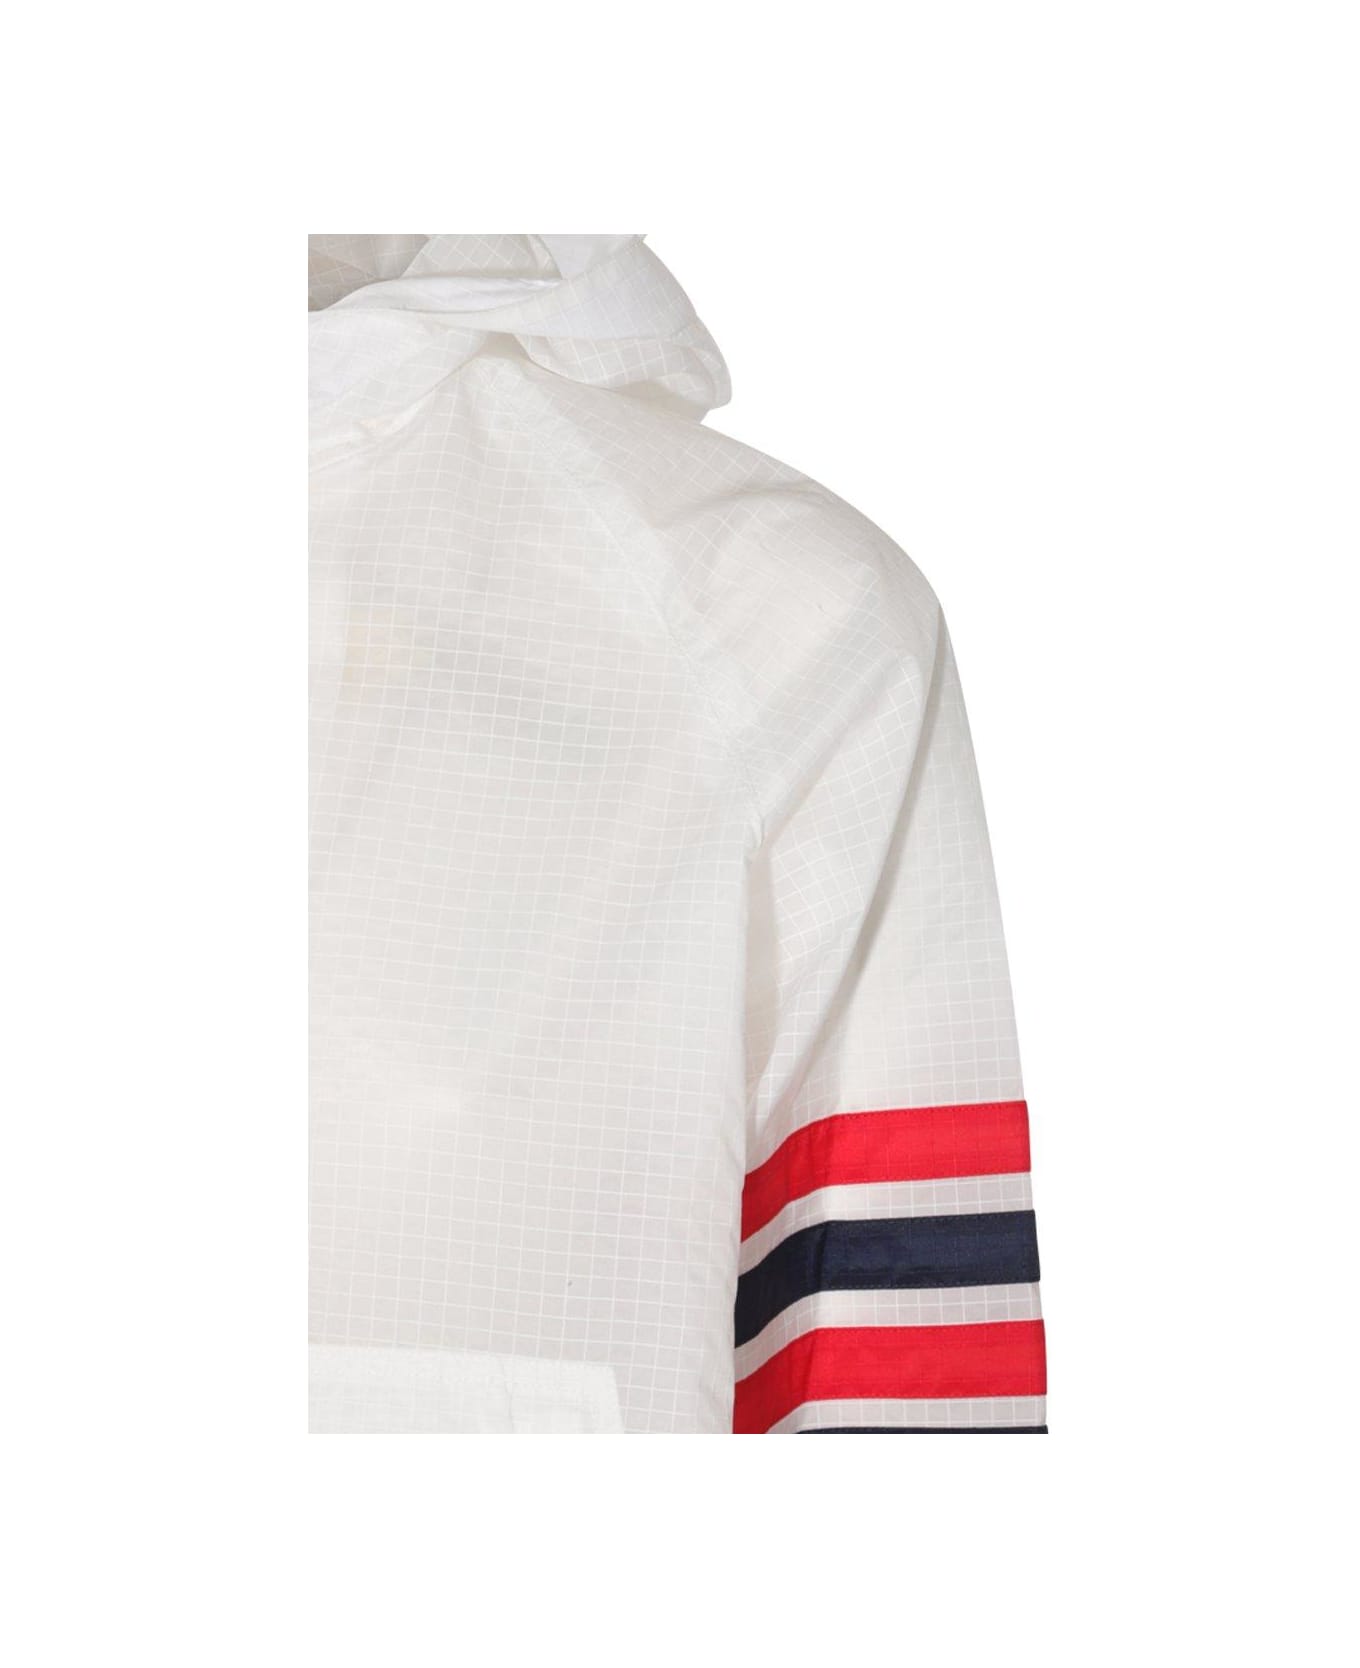 Thom Browne 4-bar Stripe Detailed Hooded Jacket - WHITE ジャケット